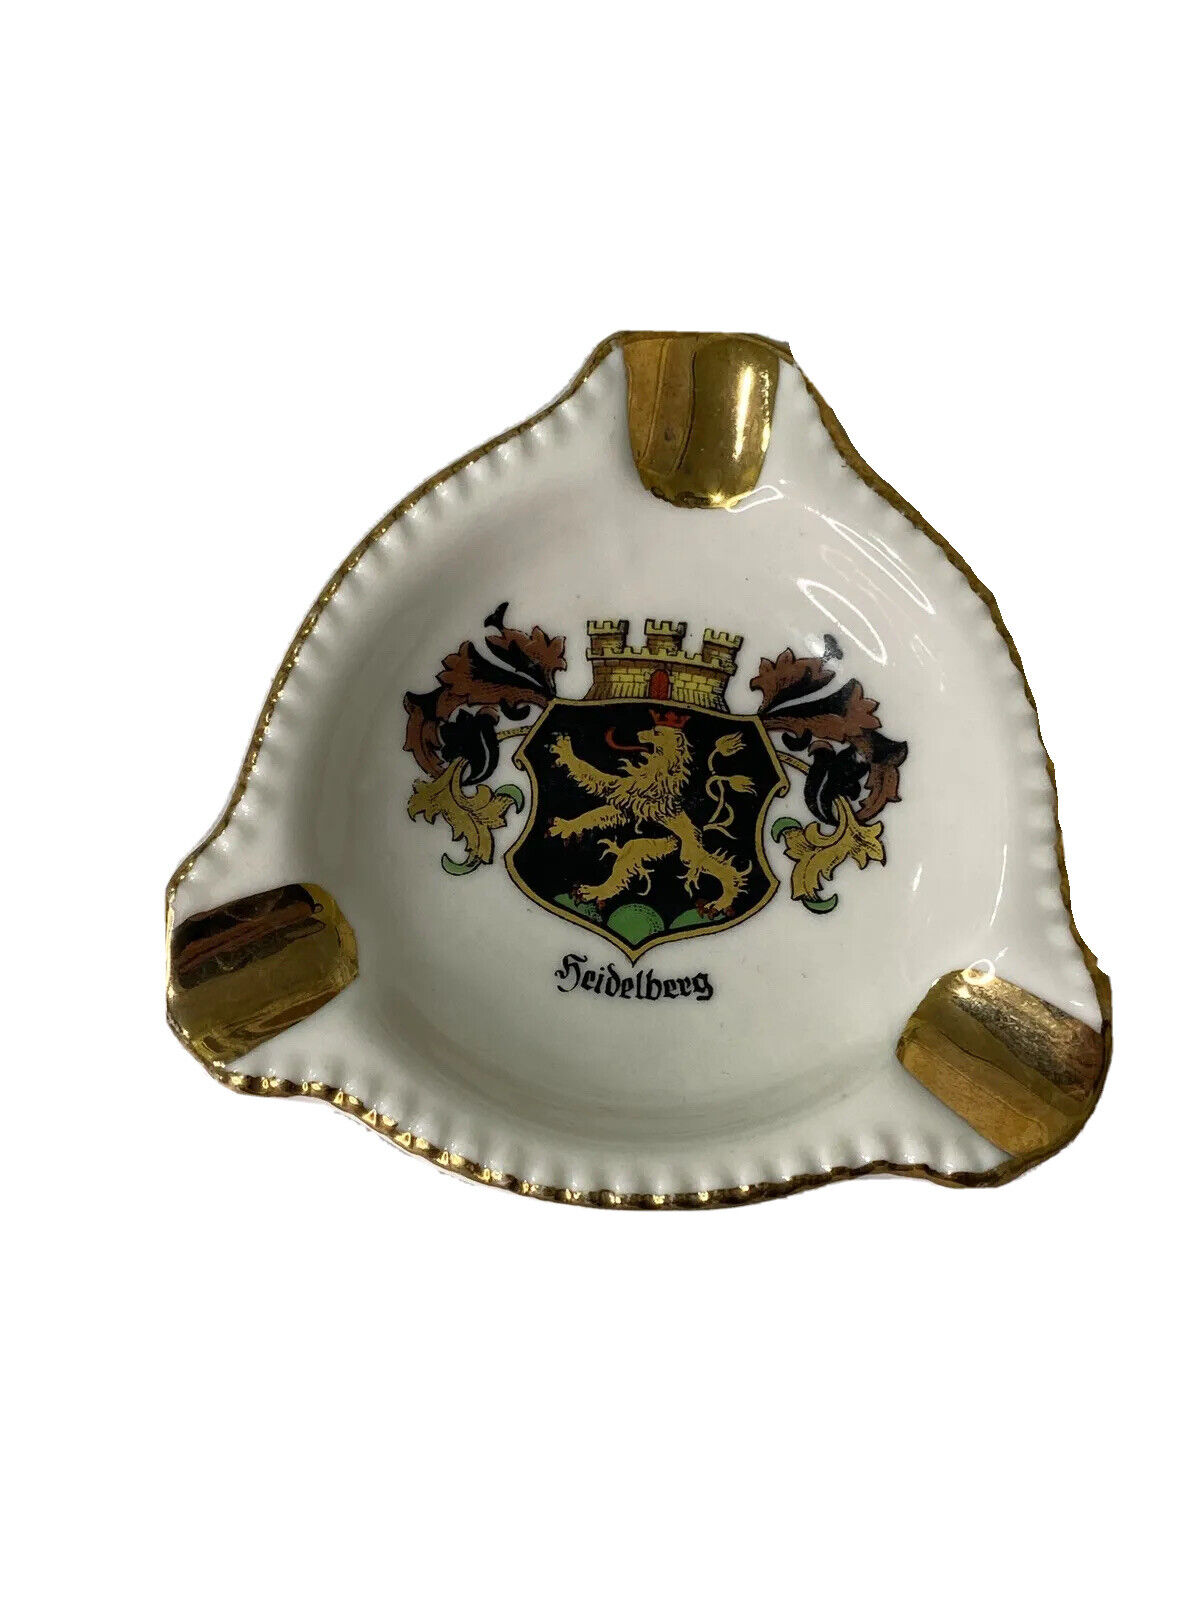 Vintage Heidelberg Ceramic Ashtray Bavaria Germany Small Trinket Dish Souvenir